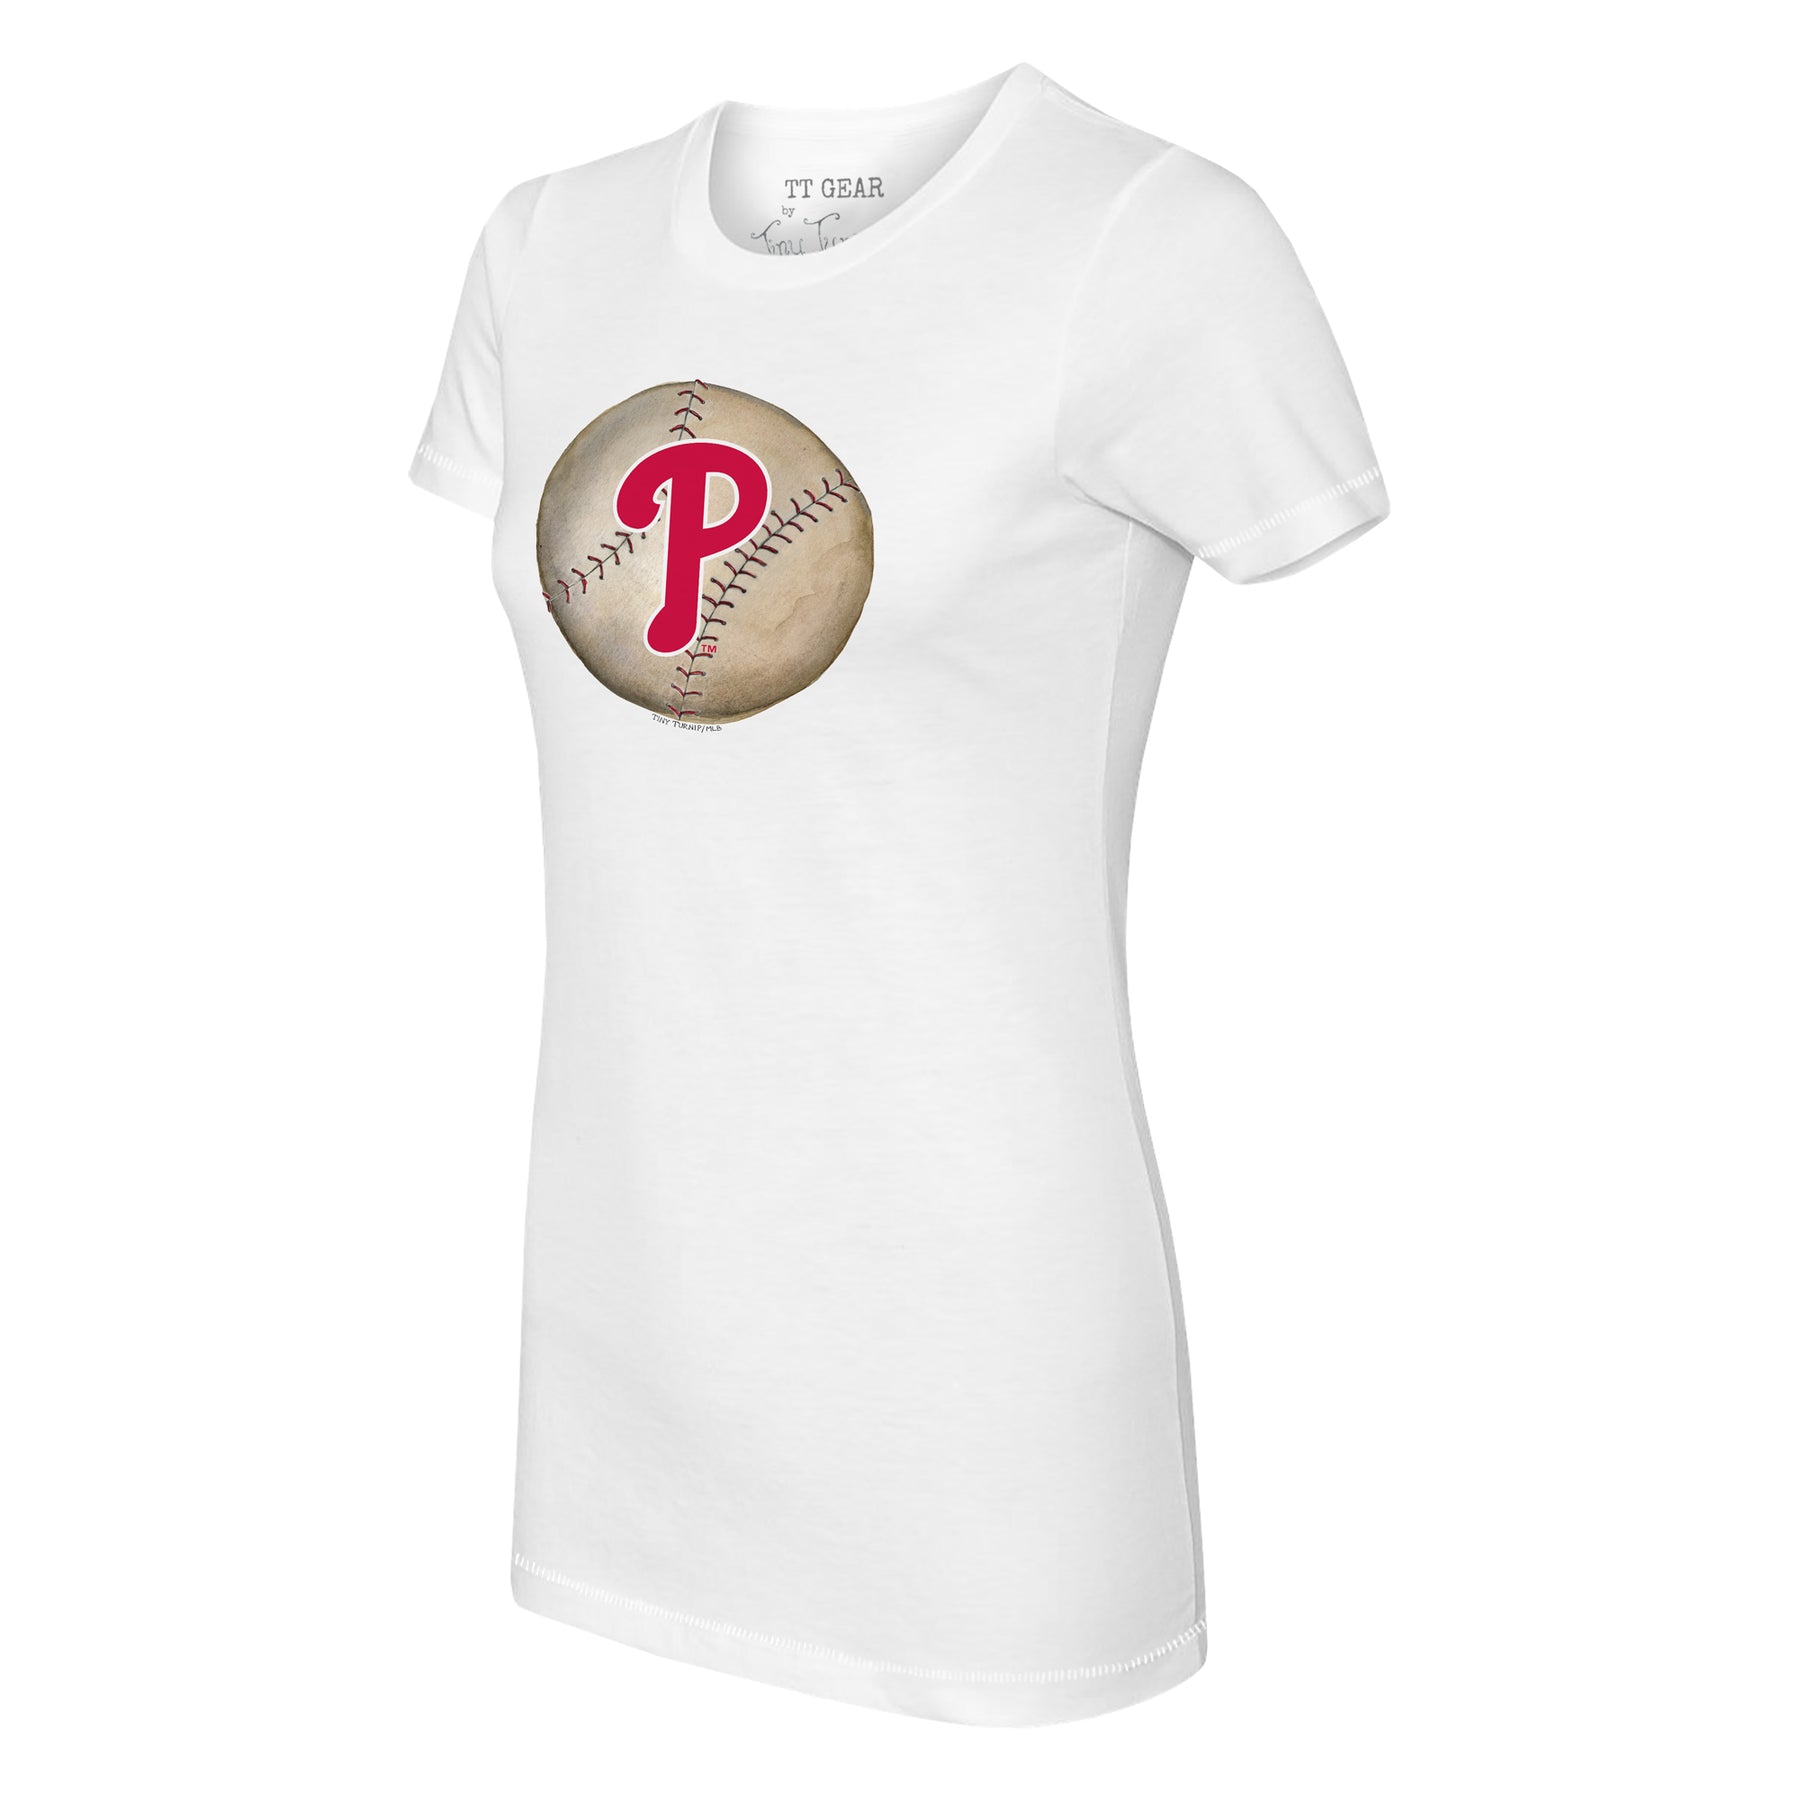 Youth Tiny Turnip White Philadelphia Phillies Baseball Babes T-Shirt Size: Small